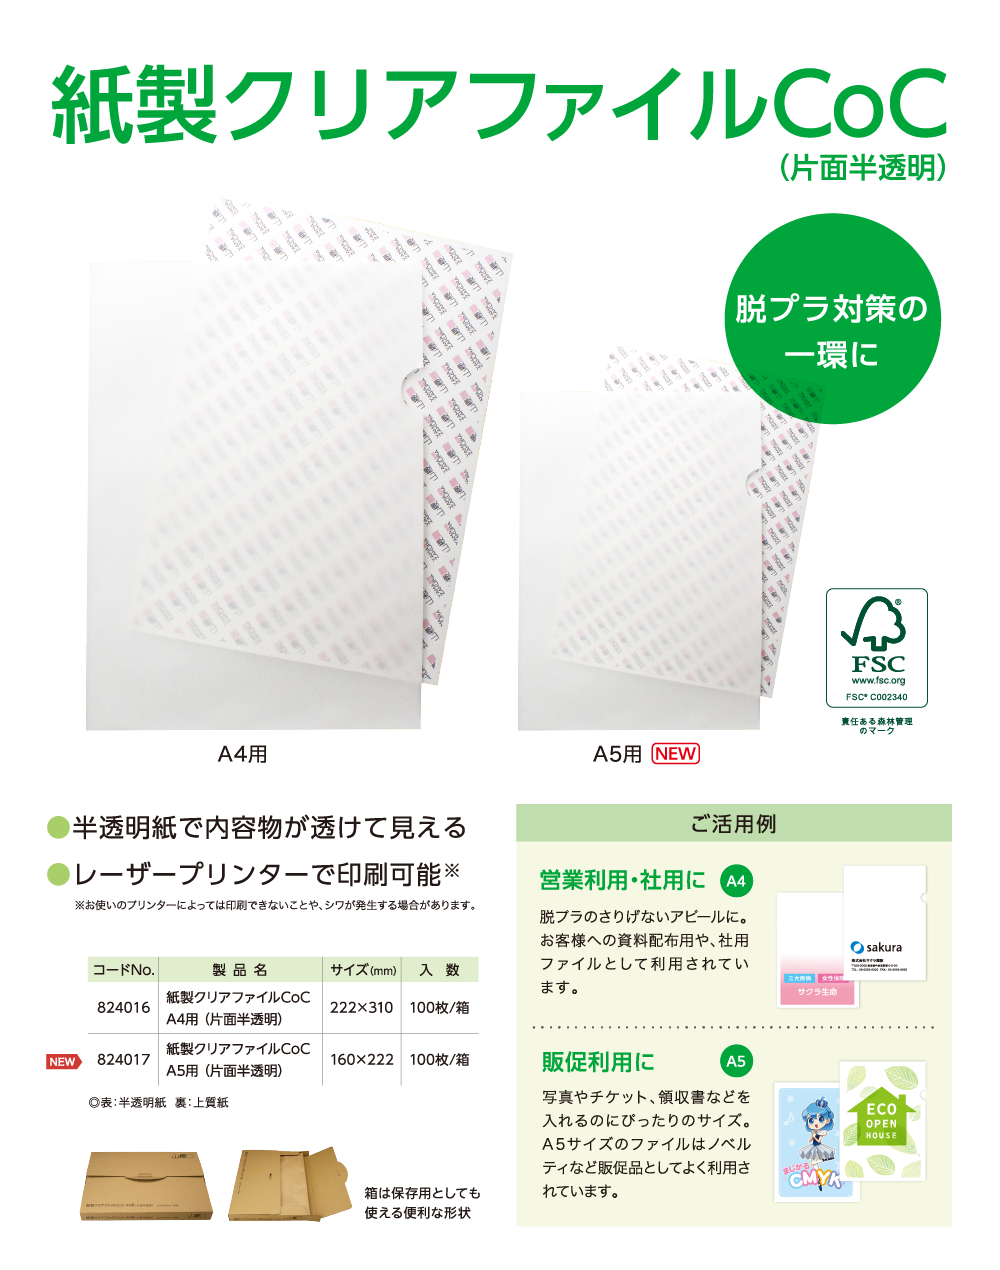 Sakura Webオフィス 山櫻オンラインショップ紙製クリアファイルcoc 用